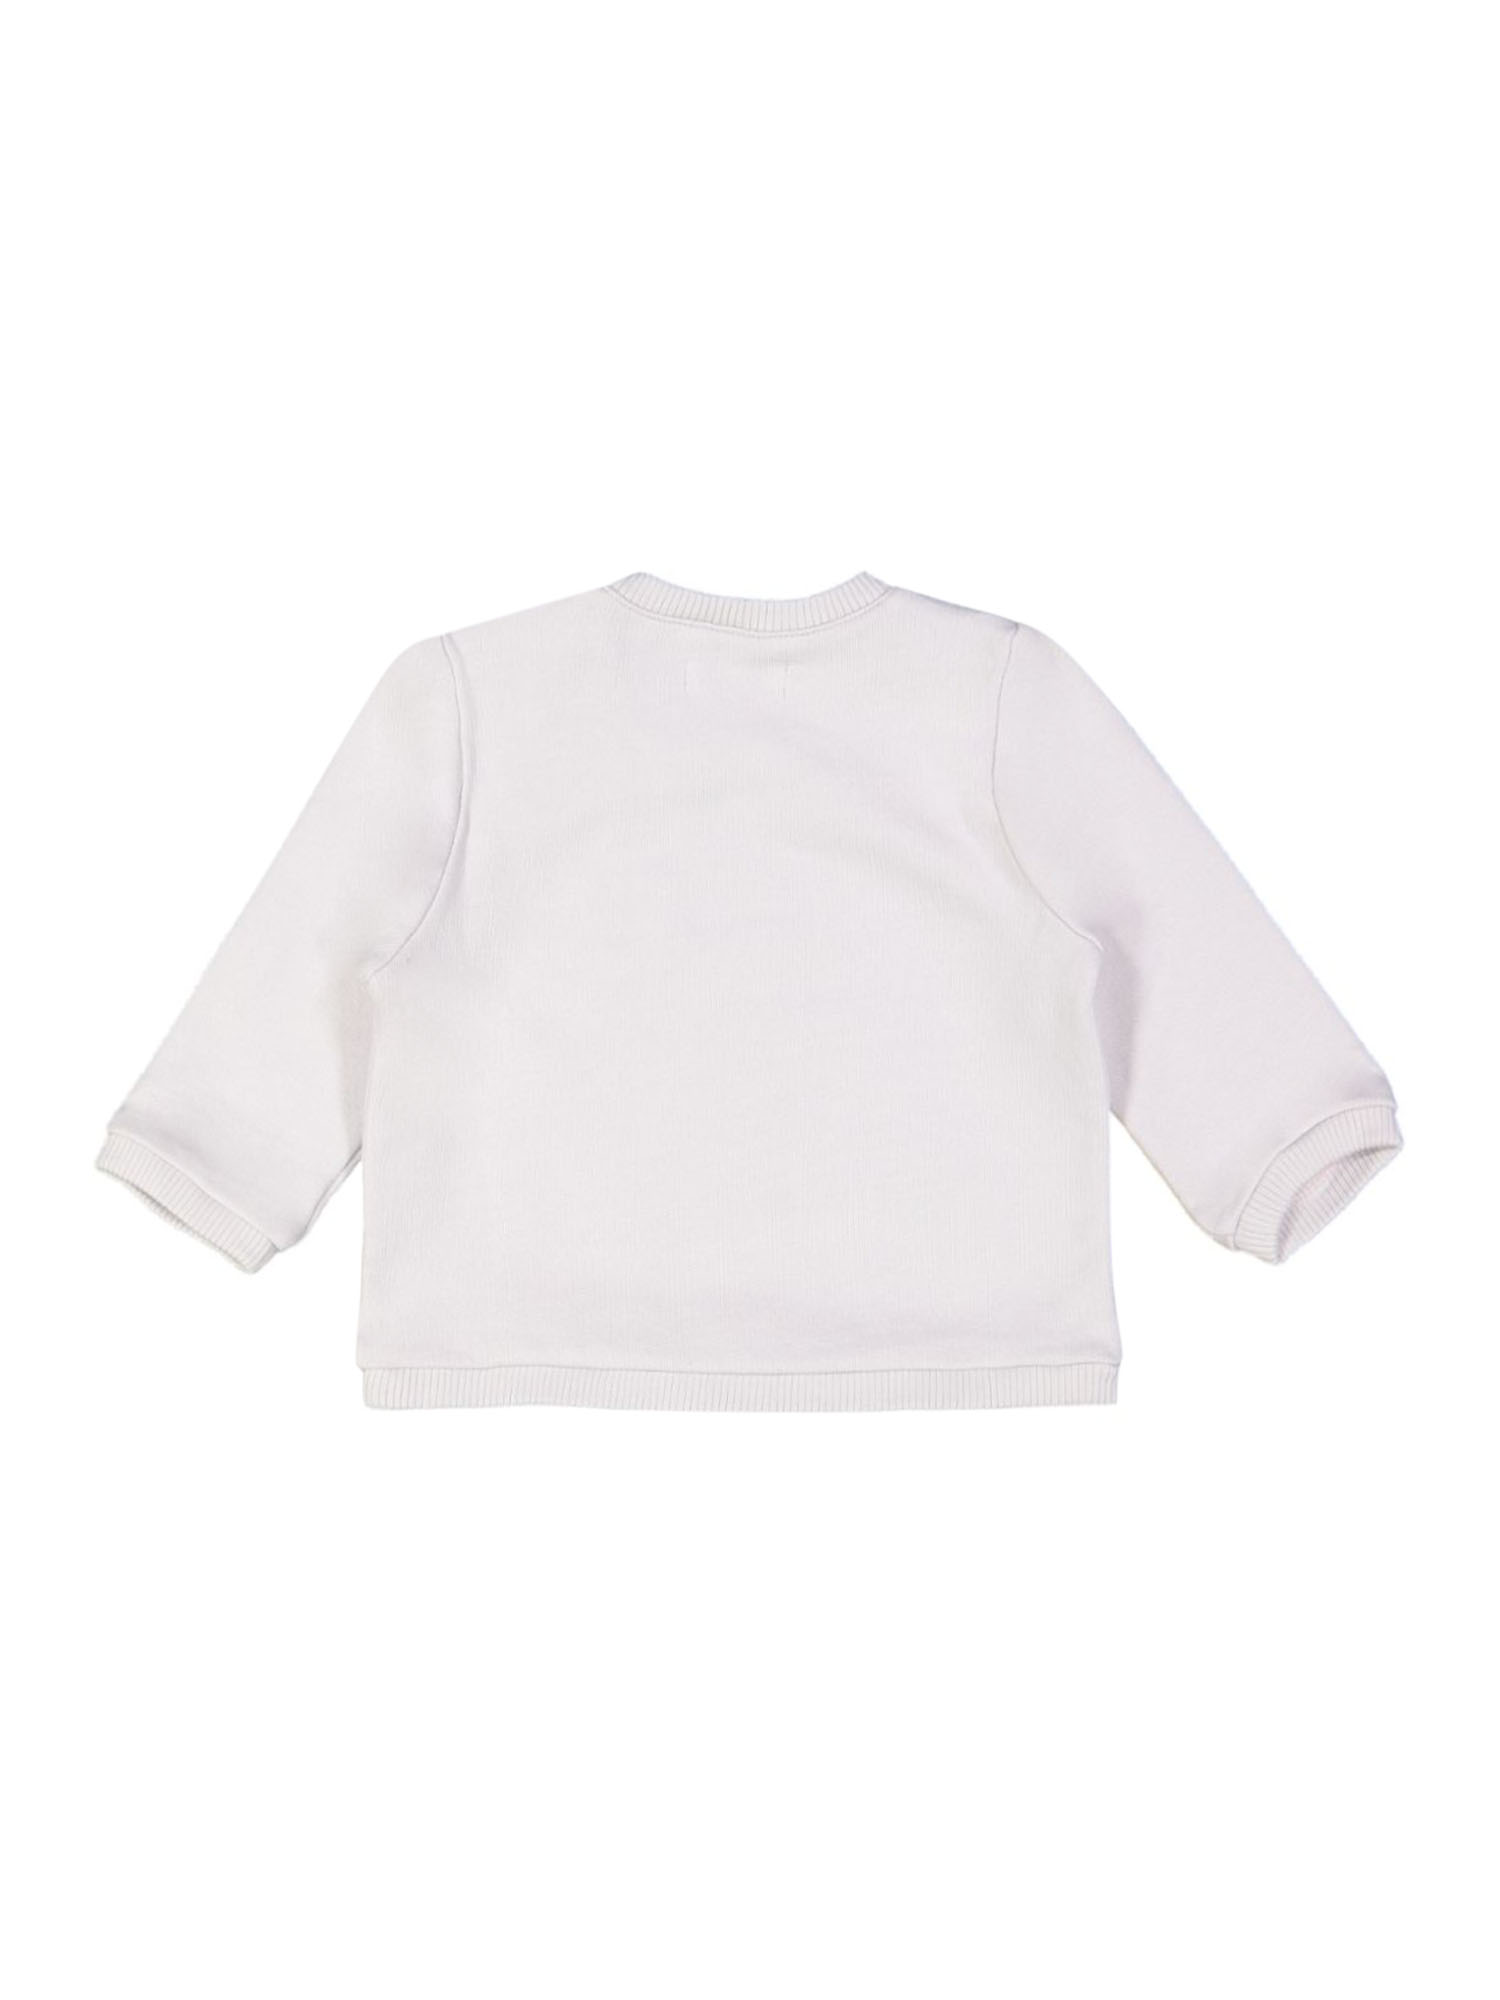 sweater mini meow lila 03m